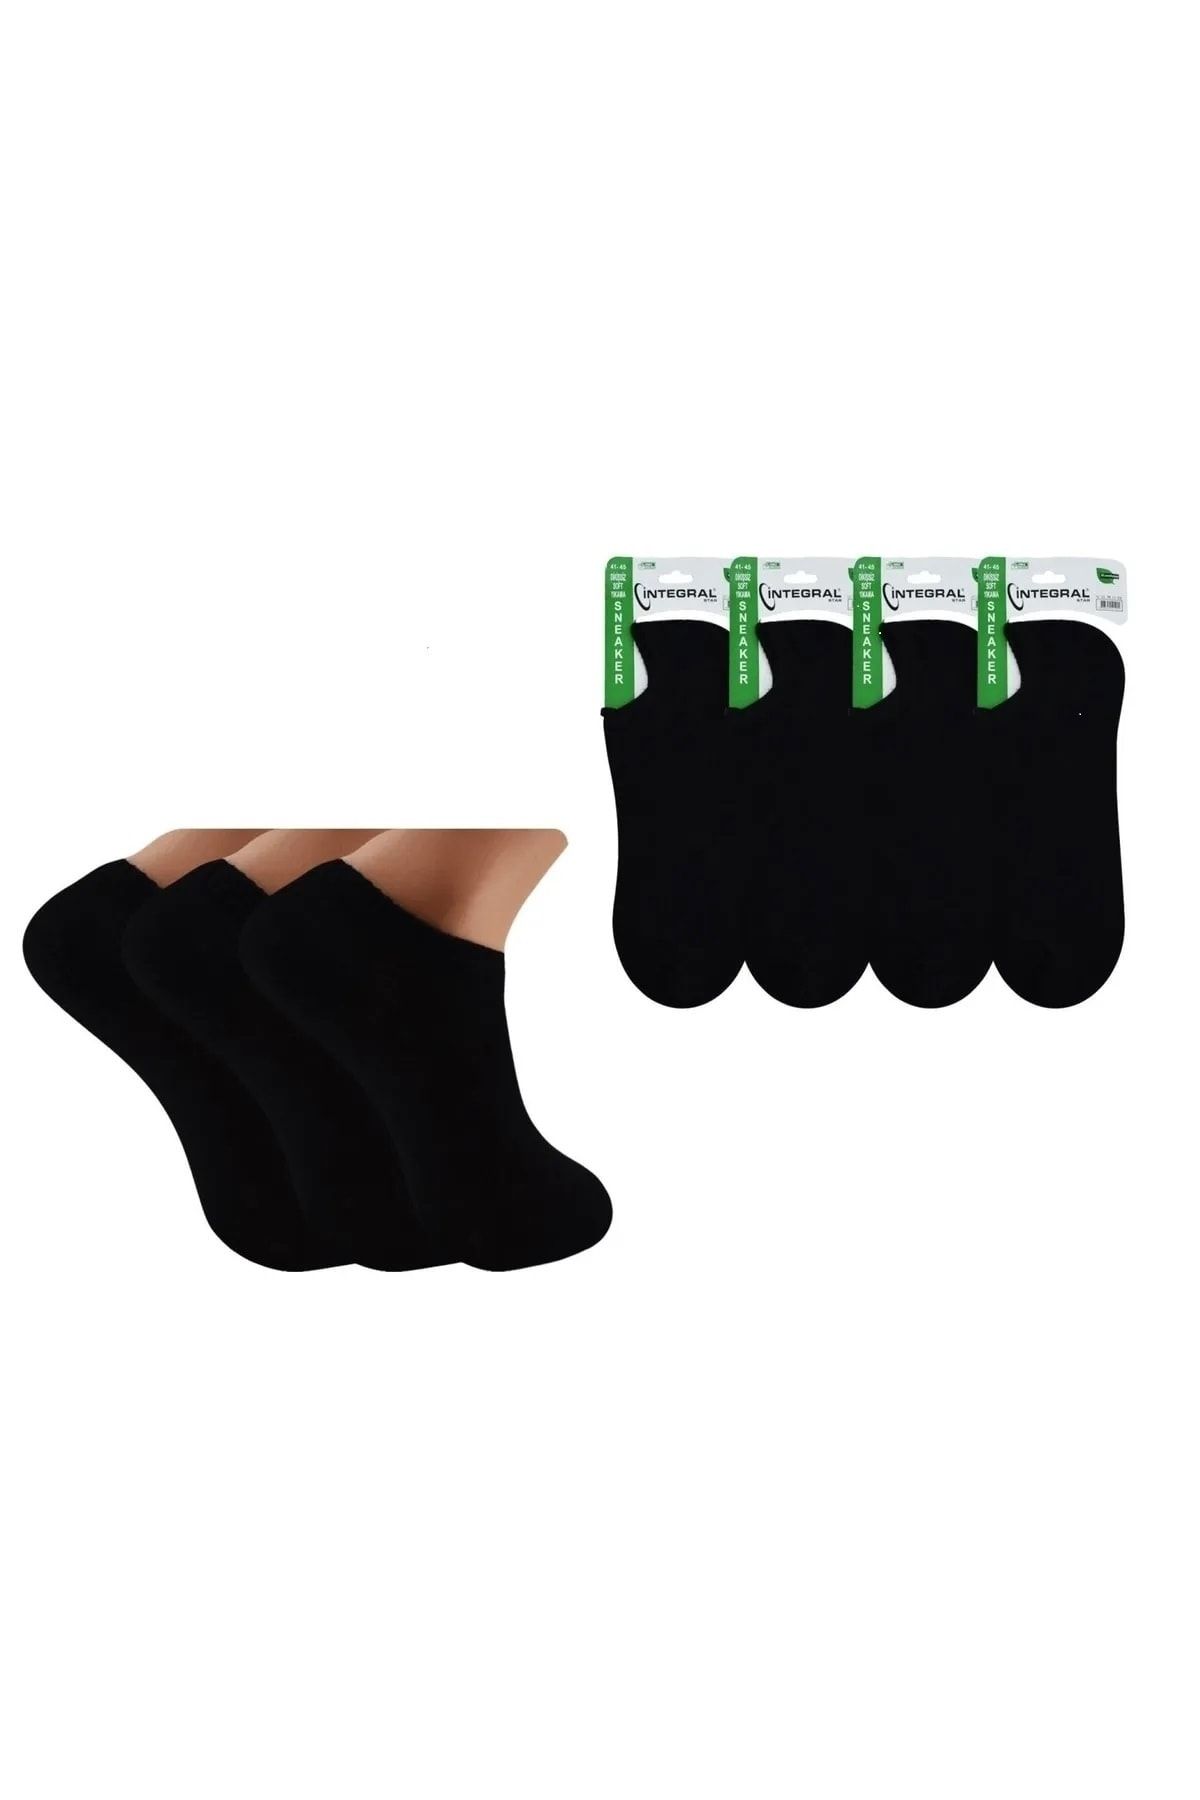 İntegral Bambu Dikişsiz Siyah Erkek Sneakers Çorap (10+2 Adet Hediye)